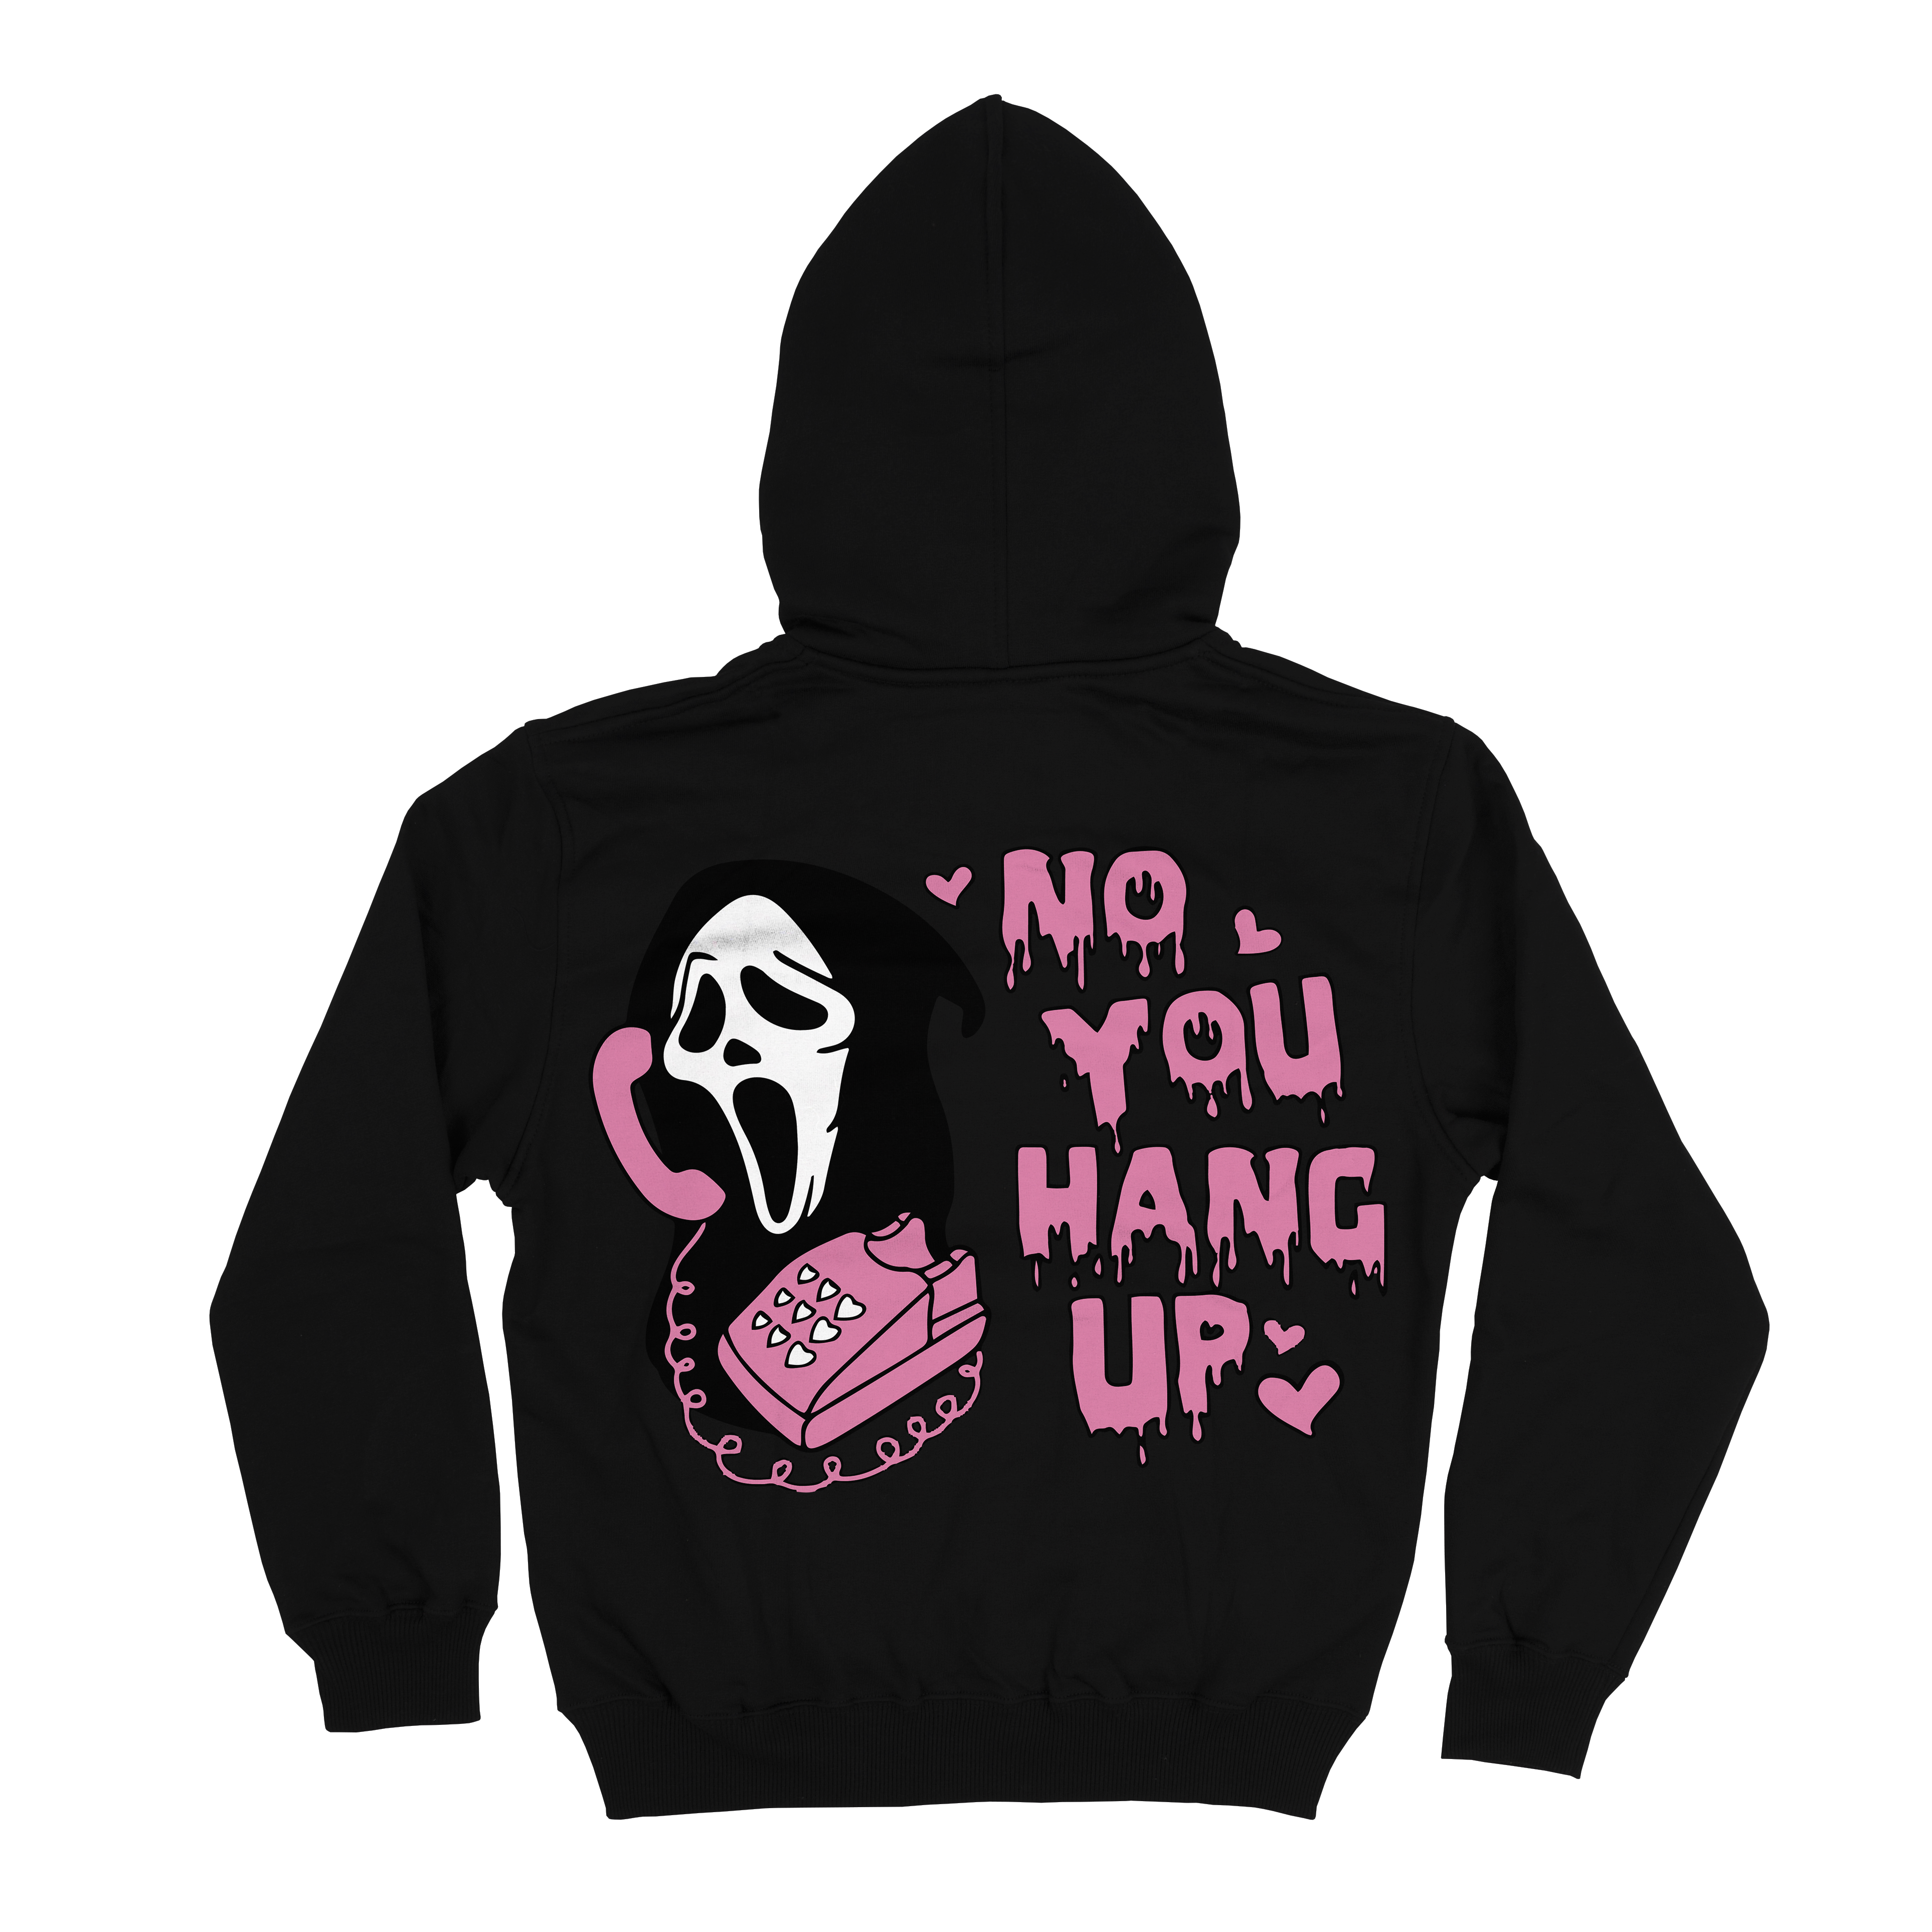 Scream - No you hang up